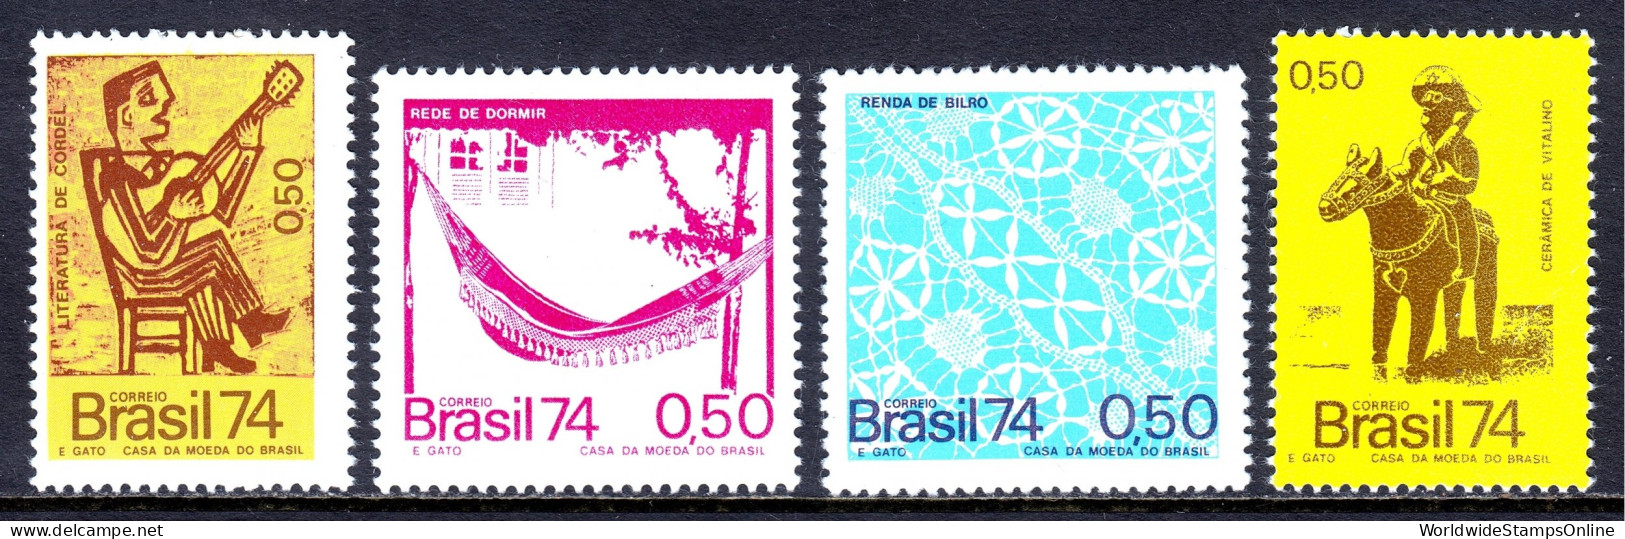 Brazil - Scott #1362-1365 - MNH - SCV $6.60 - Unused Stamps